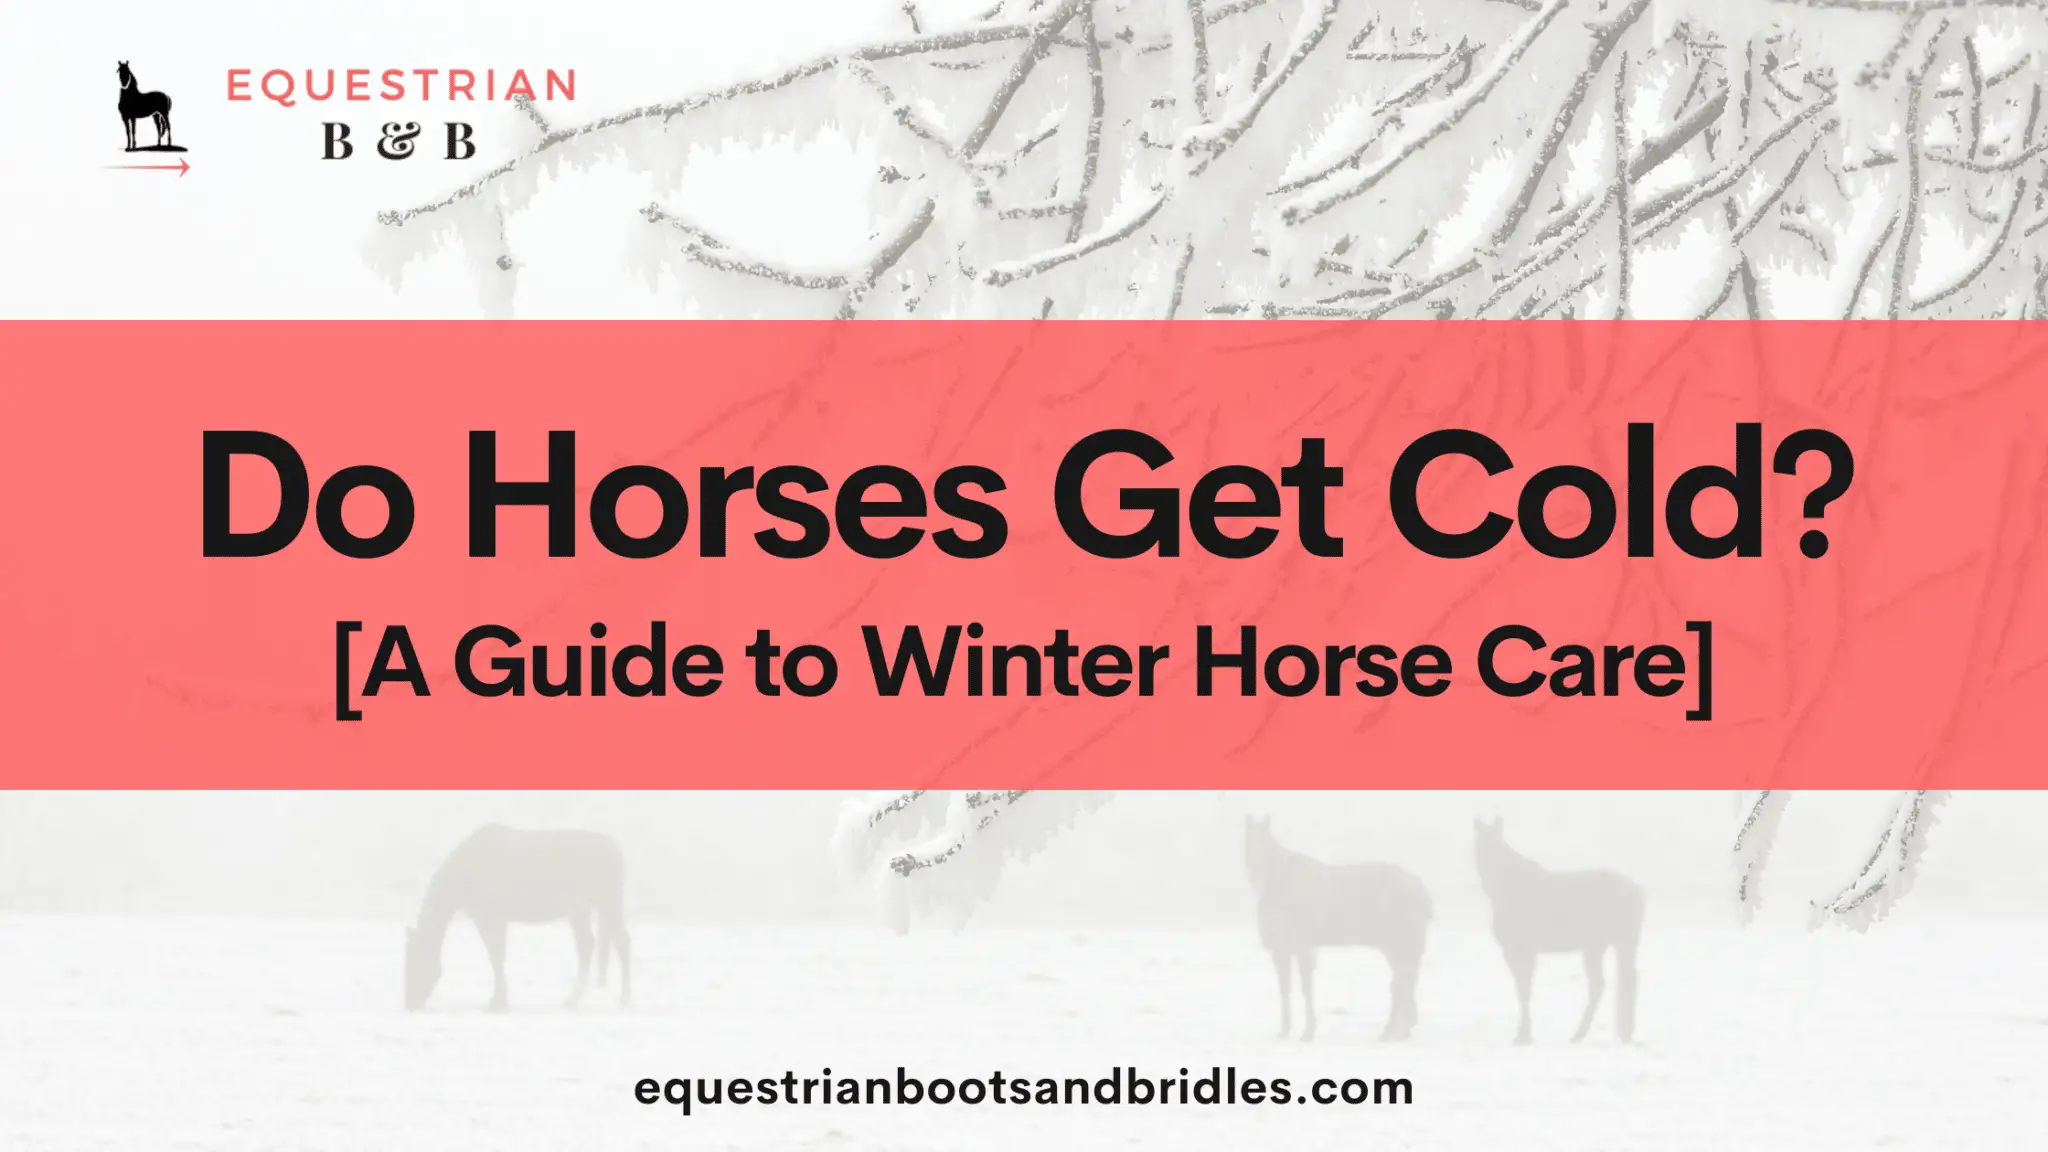 do horses get cold on equestrianbootsandbridles.com